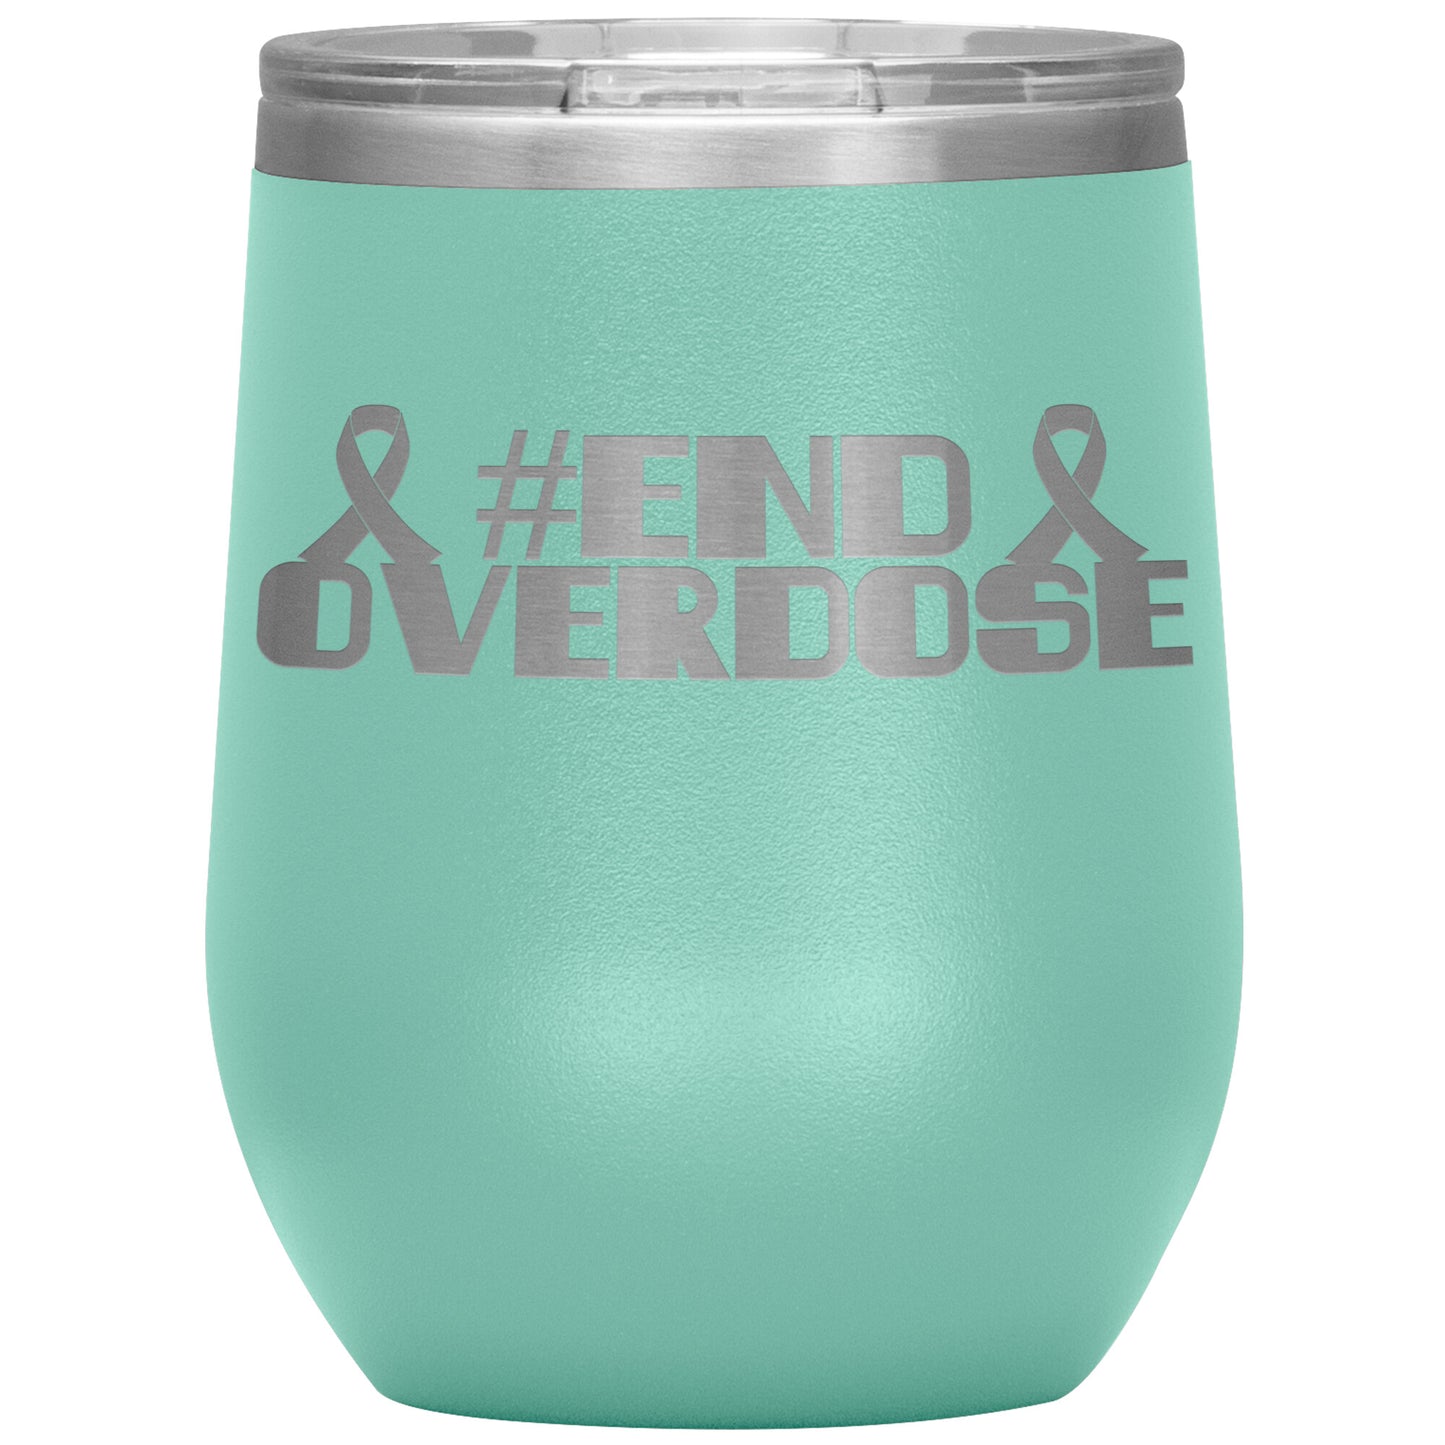 #End Overdose 12oz Wine Insulated Tumbler